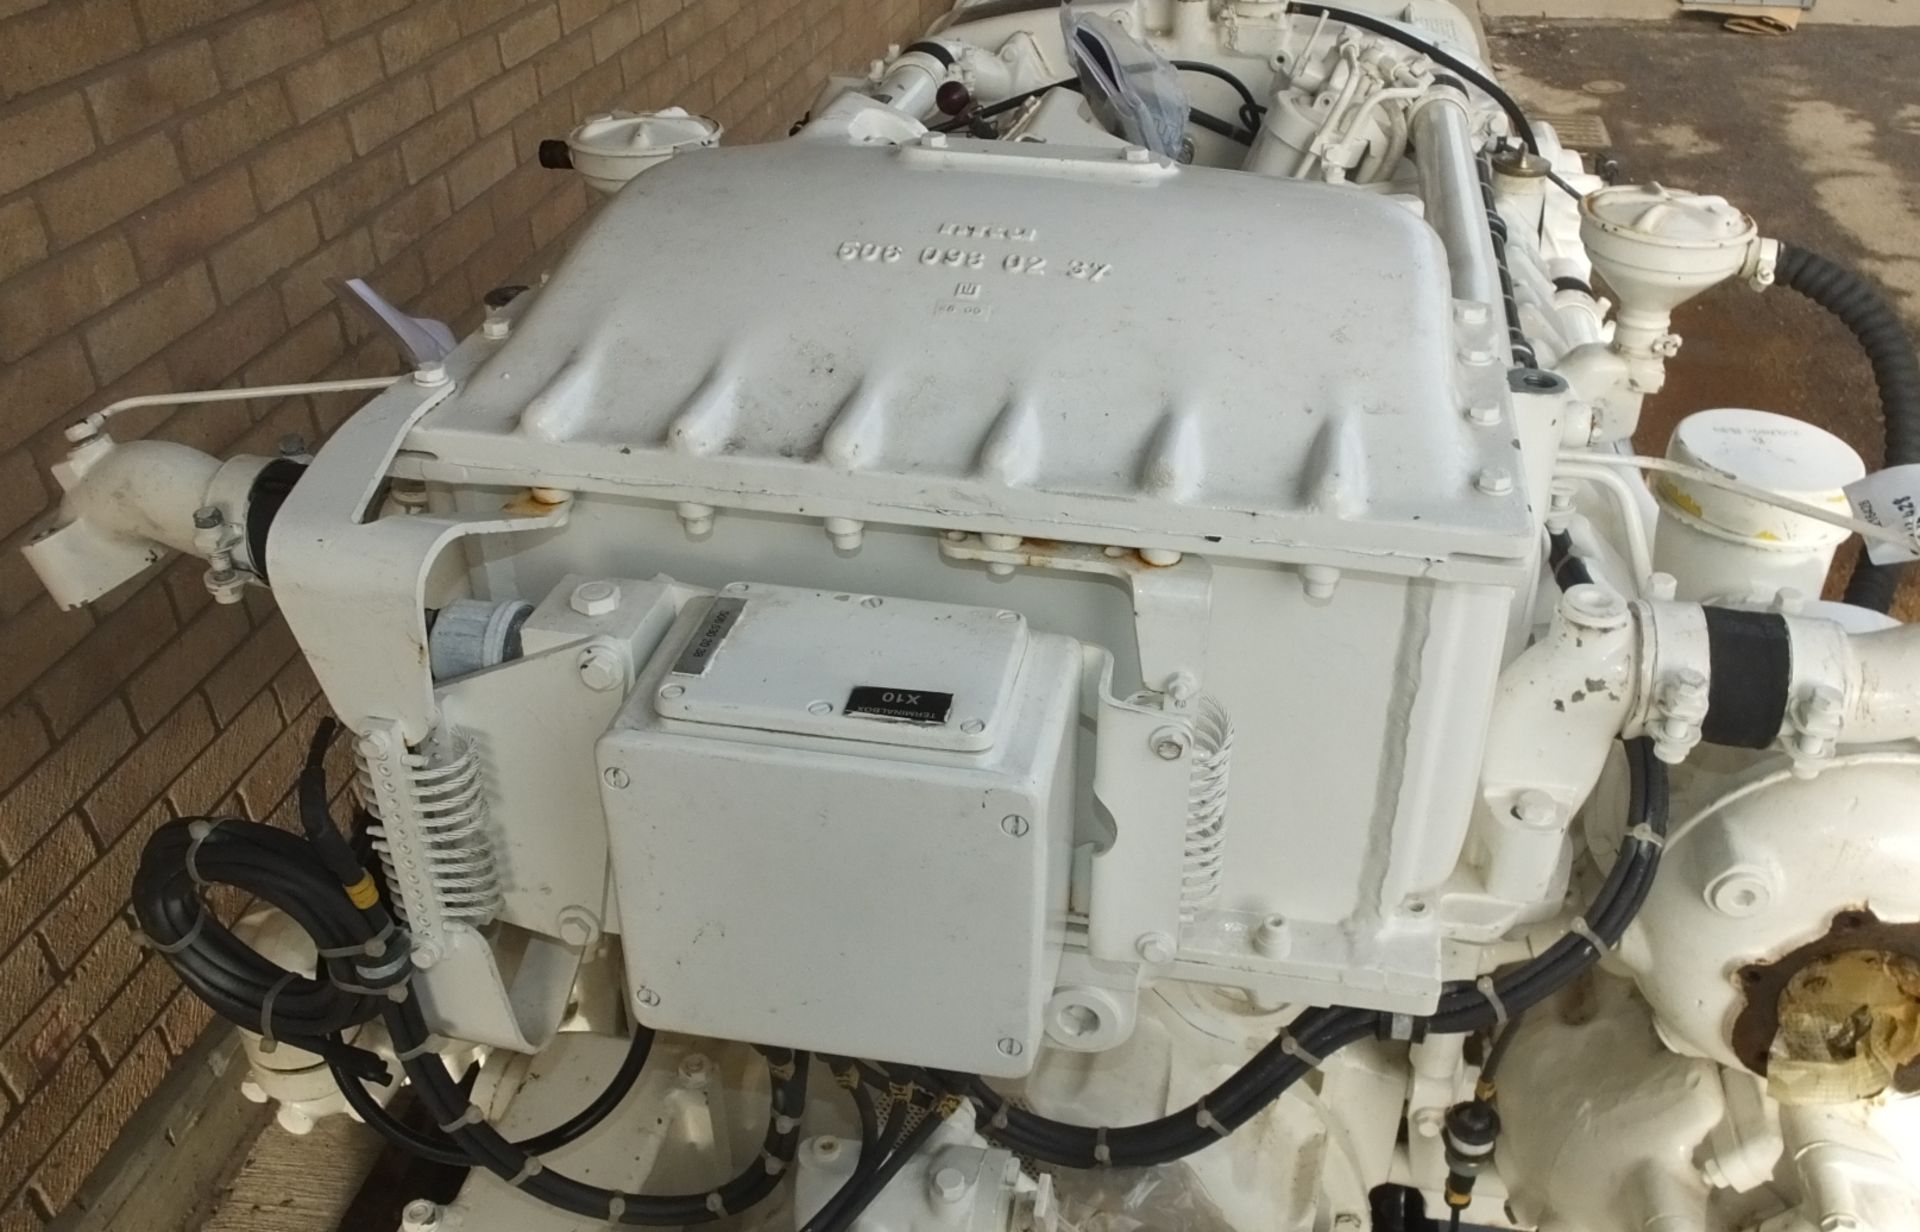 MTU 12V 183 engine - engine code OM 444 LA - 610kW - 1310HP - 2100 RPM - Gearbox ZF Marine - Image 11 of 37